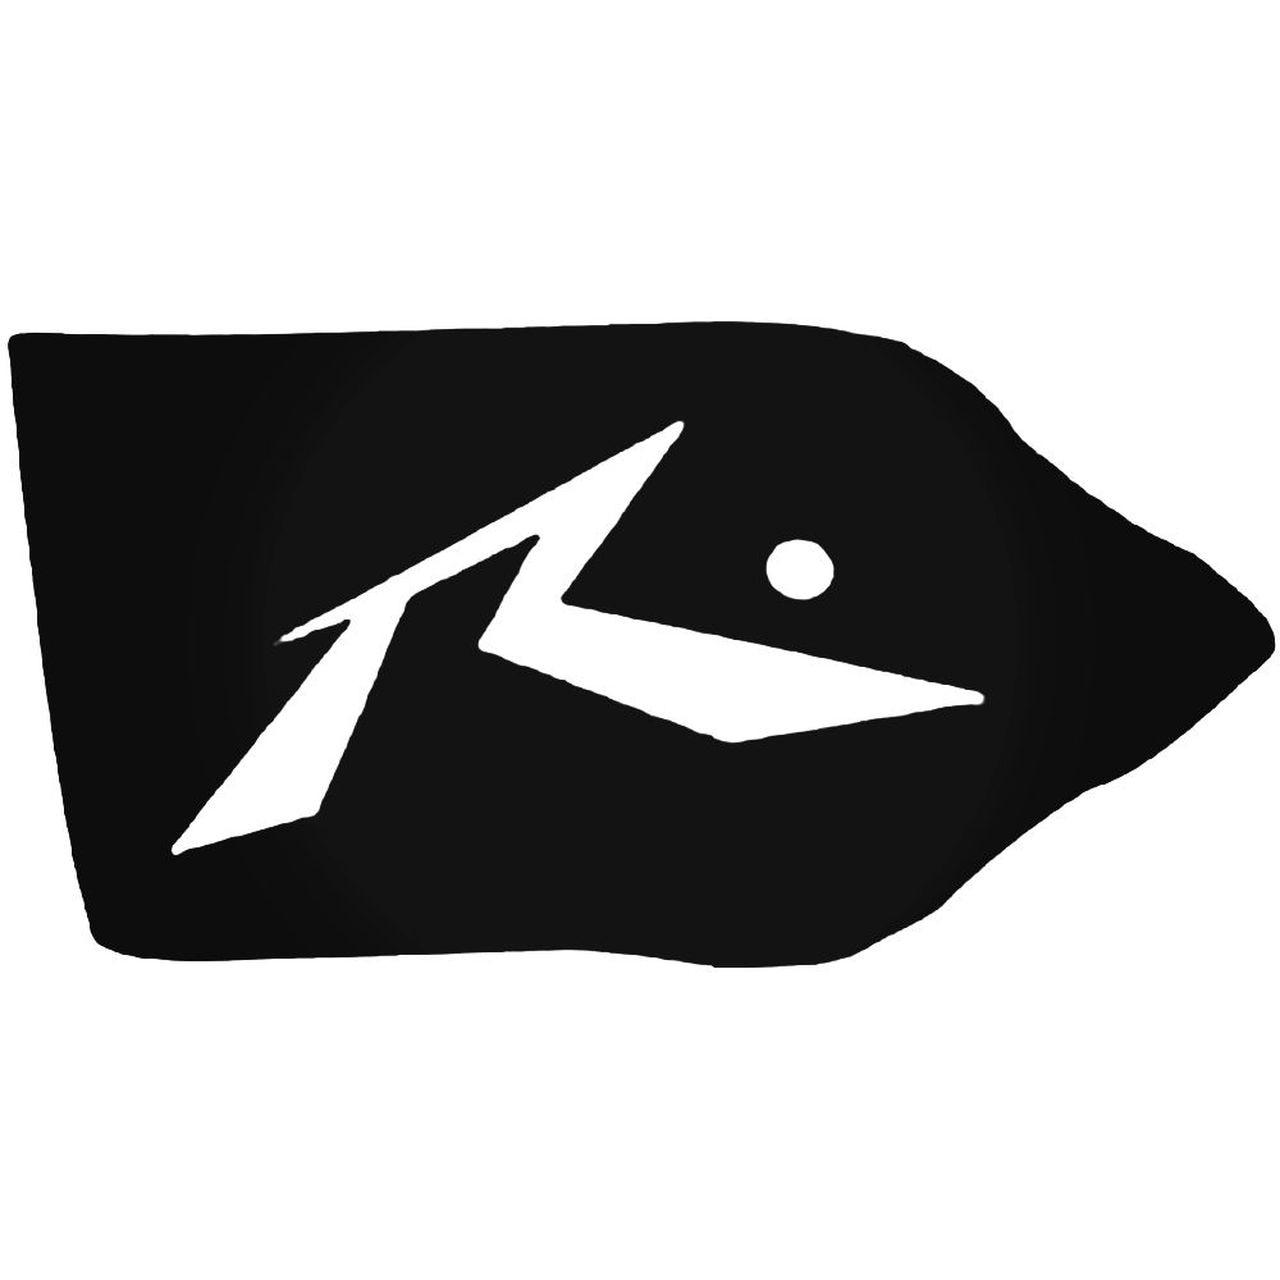 Rusty Logo - Rusty Rough Surfing Decal Sticker